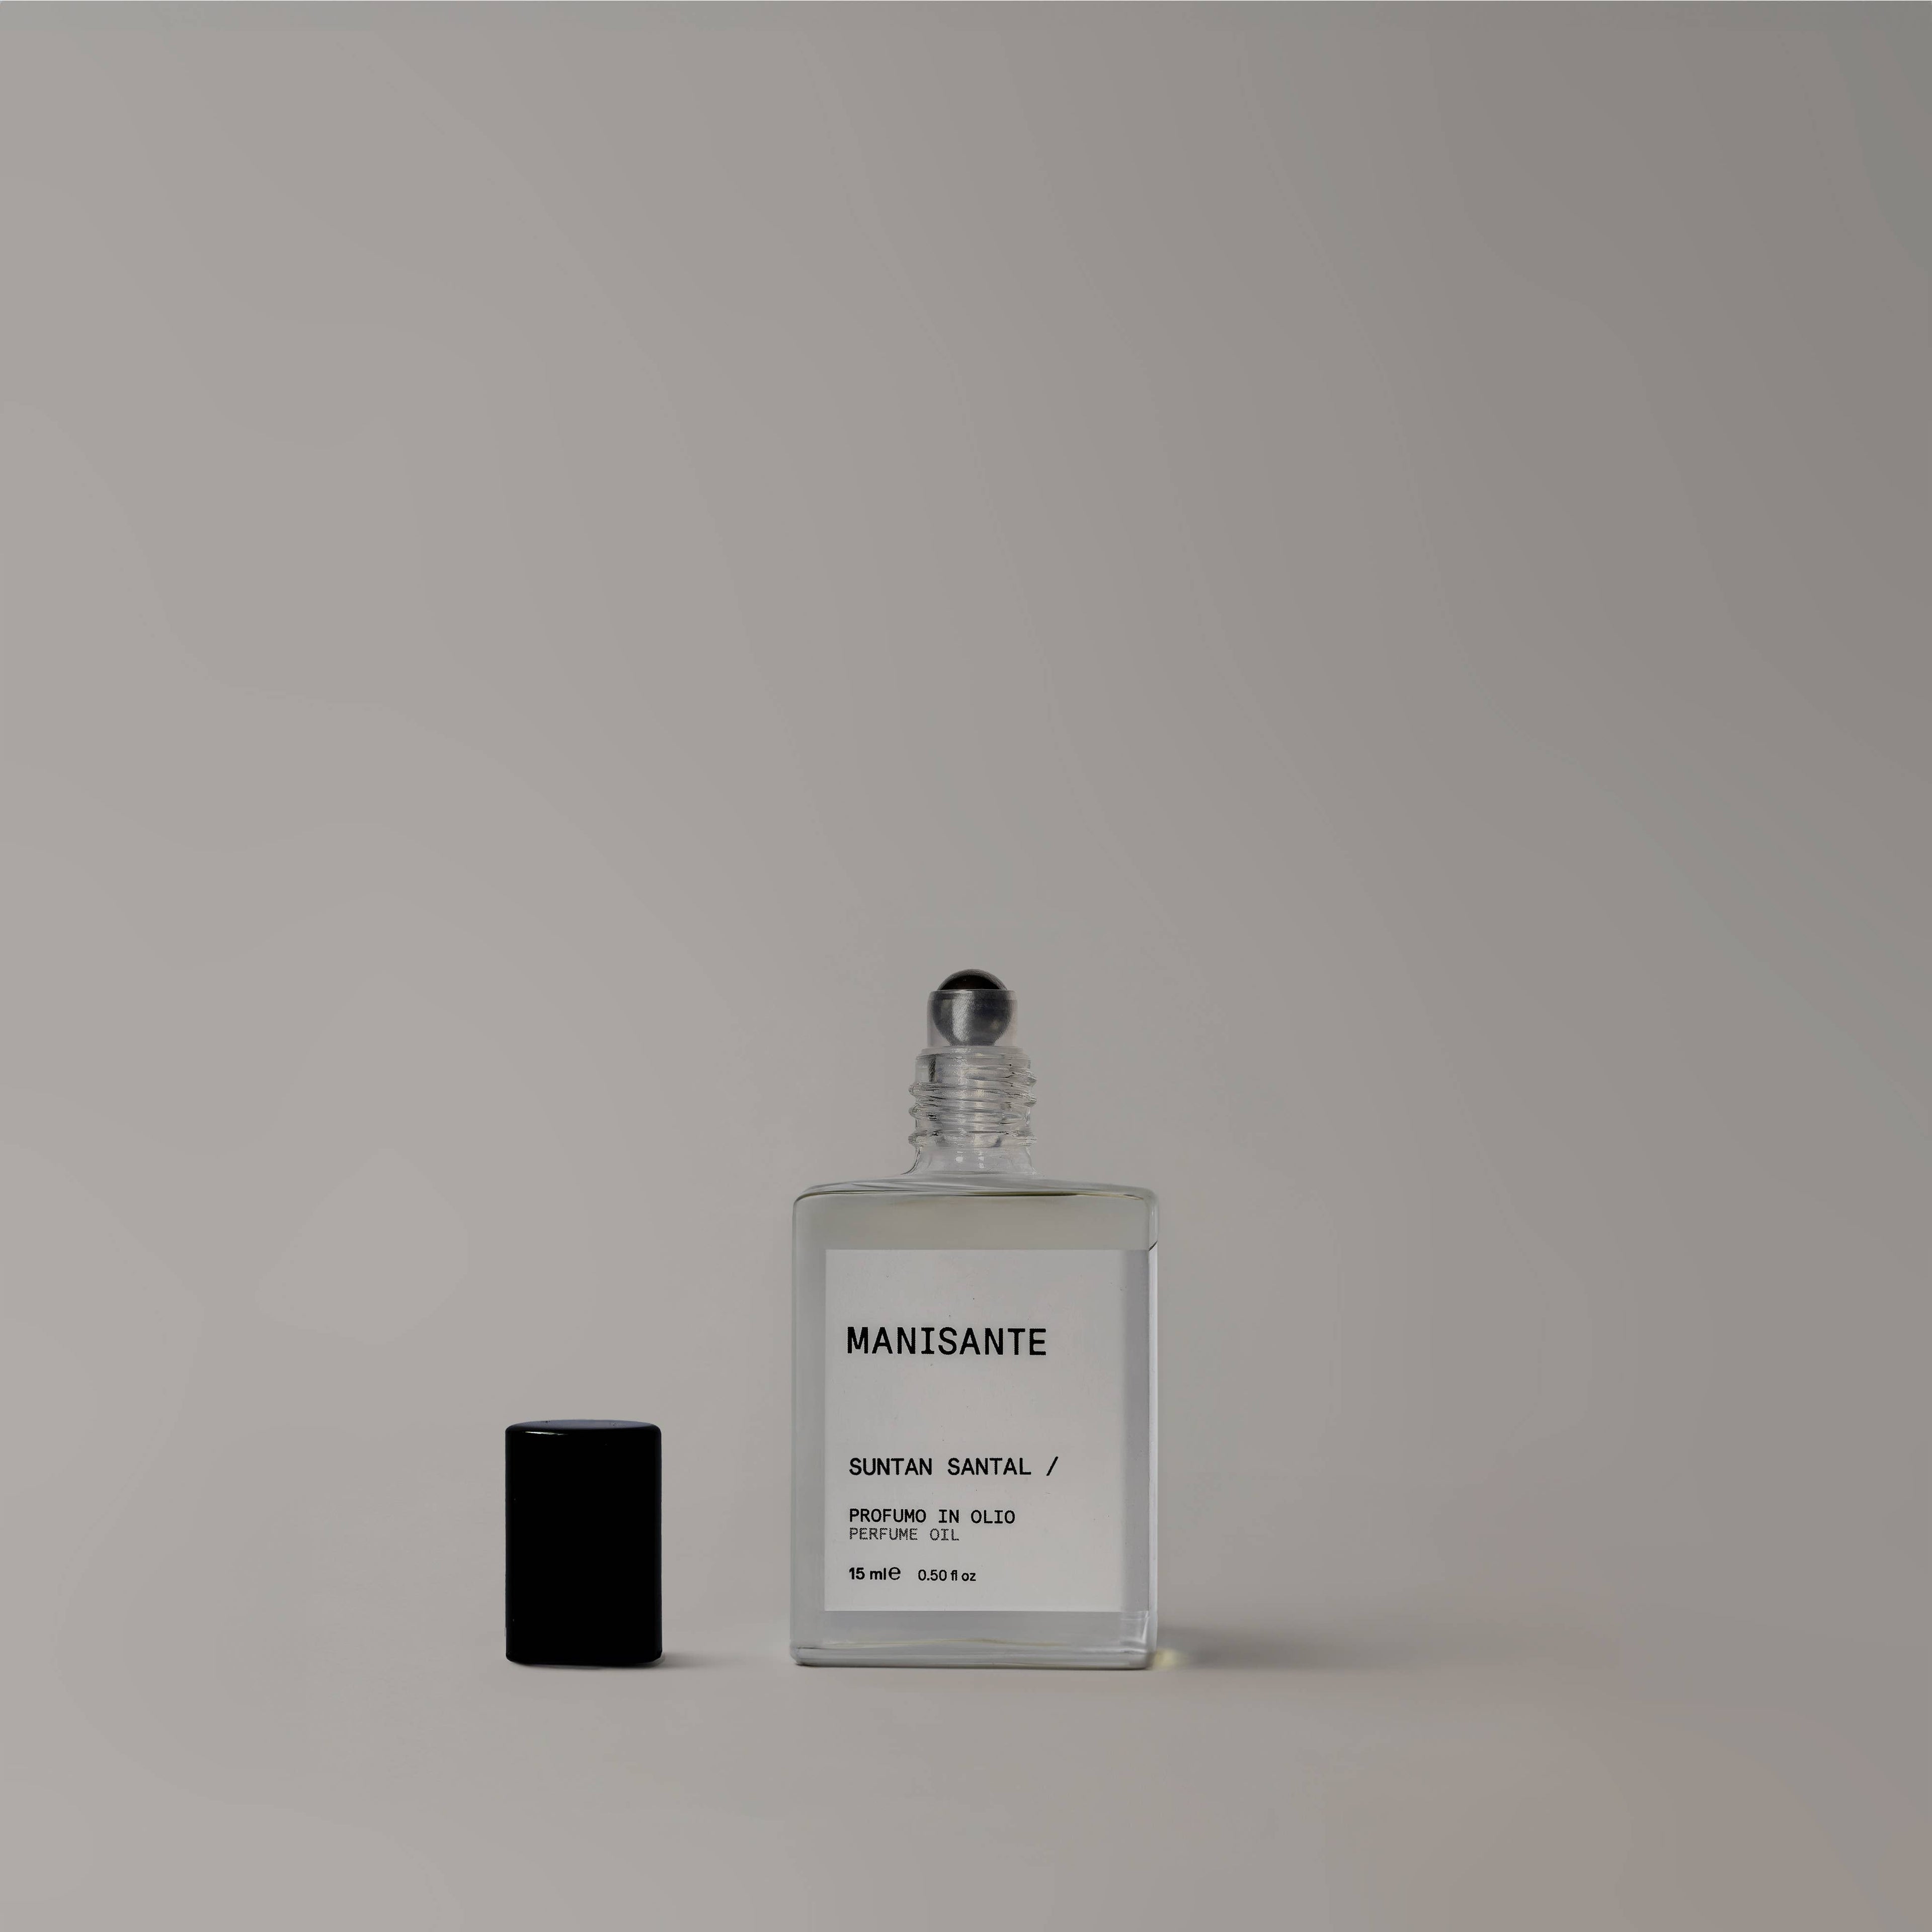 Oil perfume - SUNTAN SANTAL